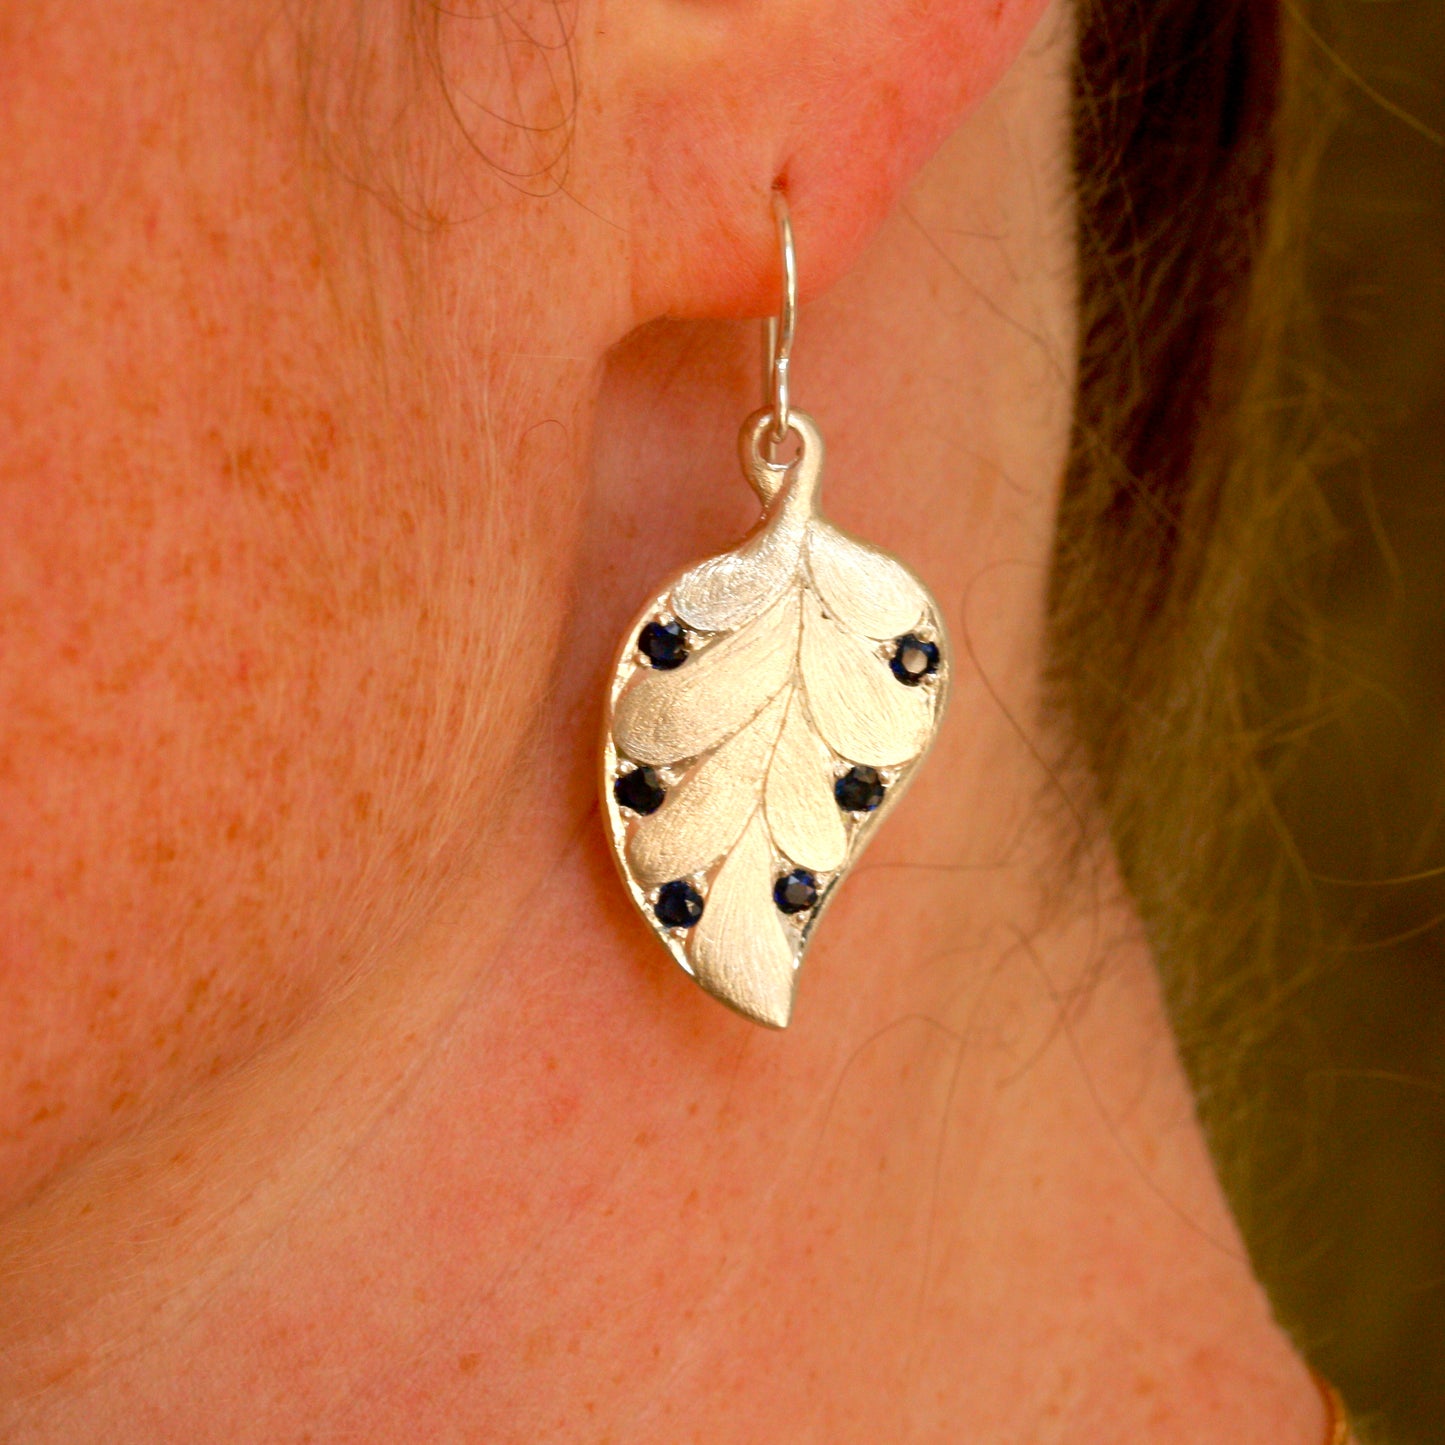 Art nouveau leaf earrings with sapphires